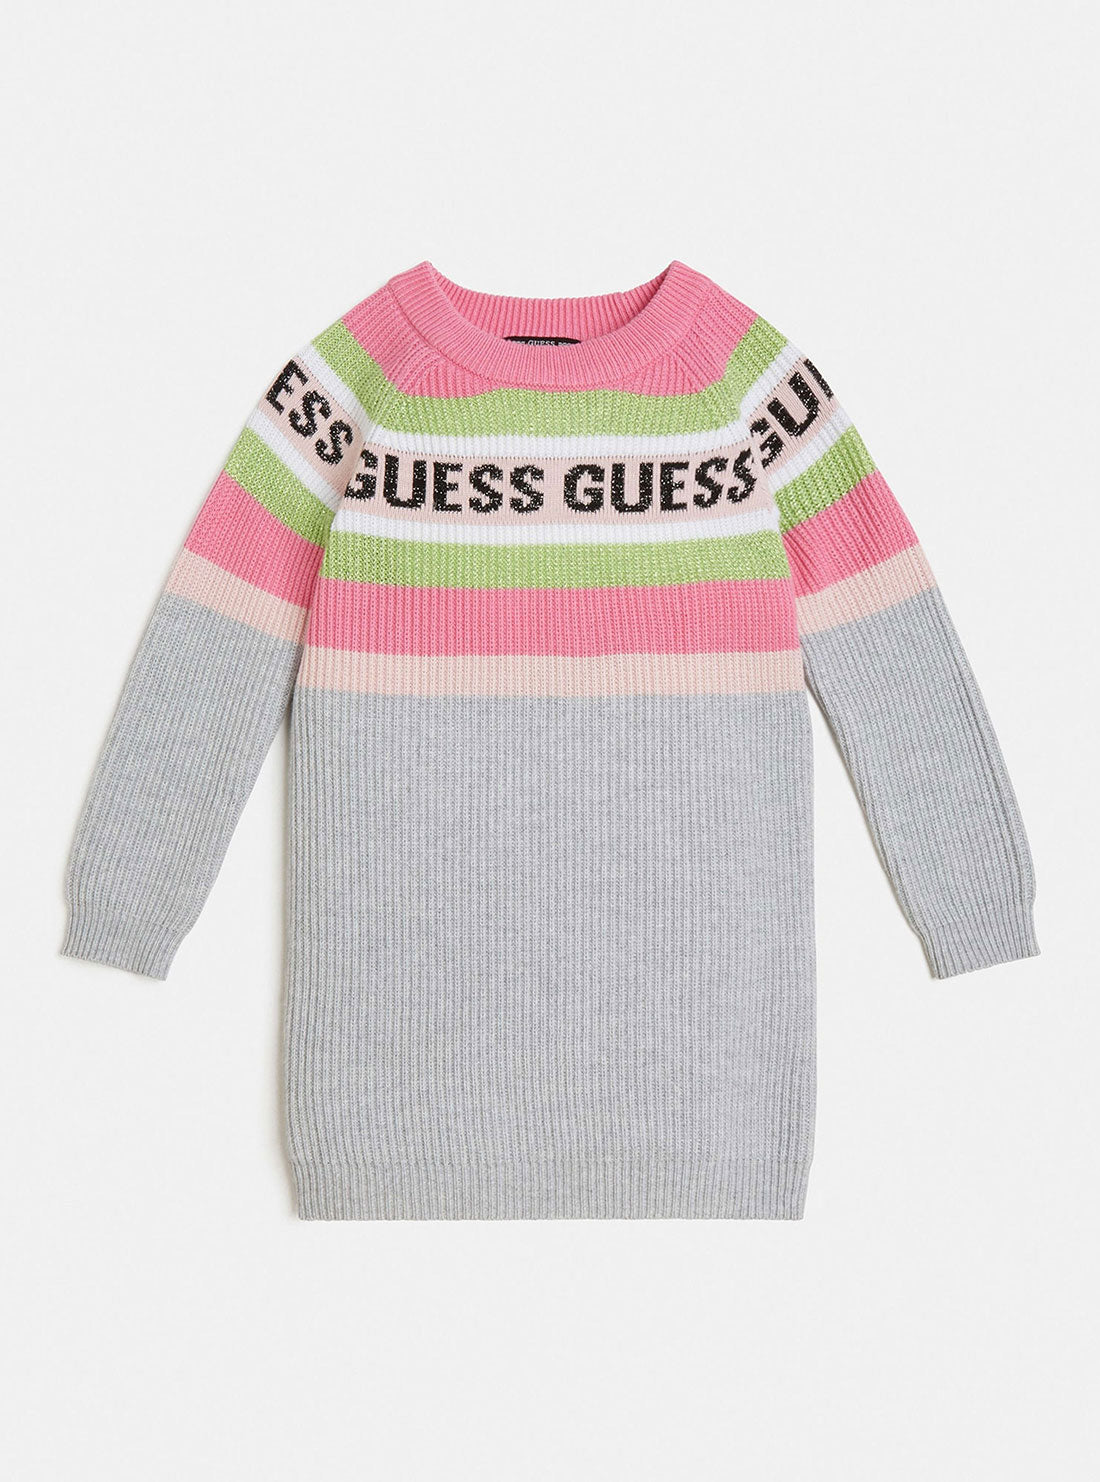 GUESS Little Girl Grey Pink Knit Logo Dress (2-7) K2BK03Z2V80 Front View